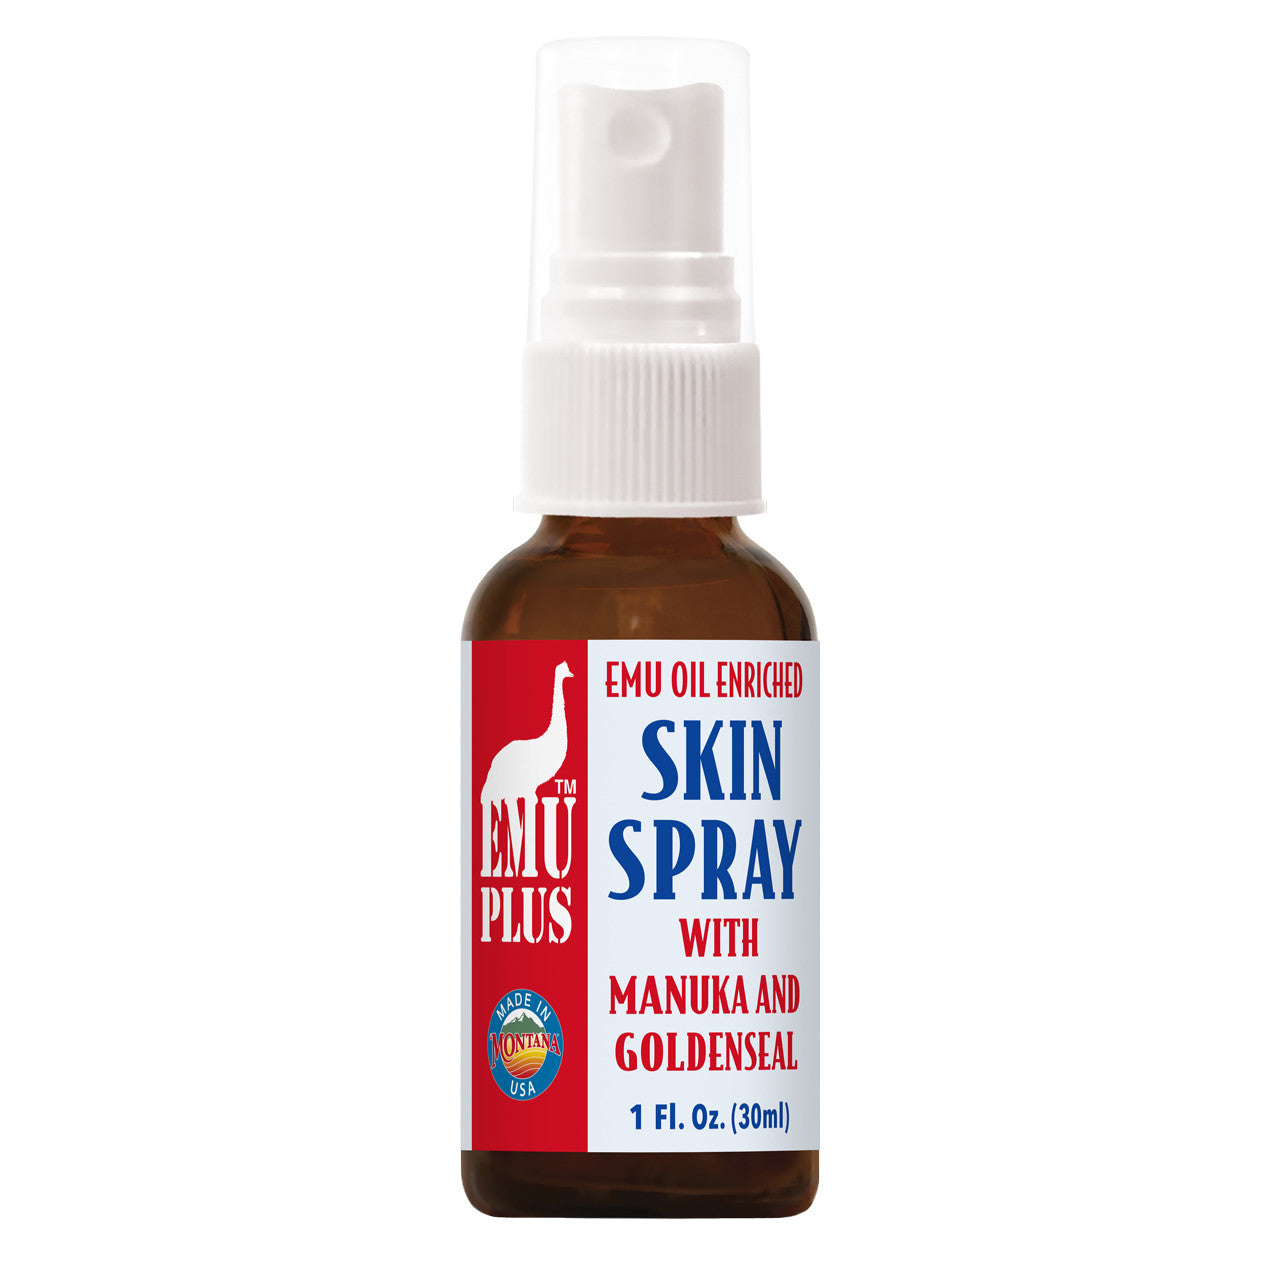 EMUplus™ Skin Spray with Manuka and Goldenseal